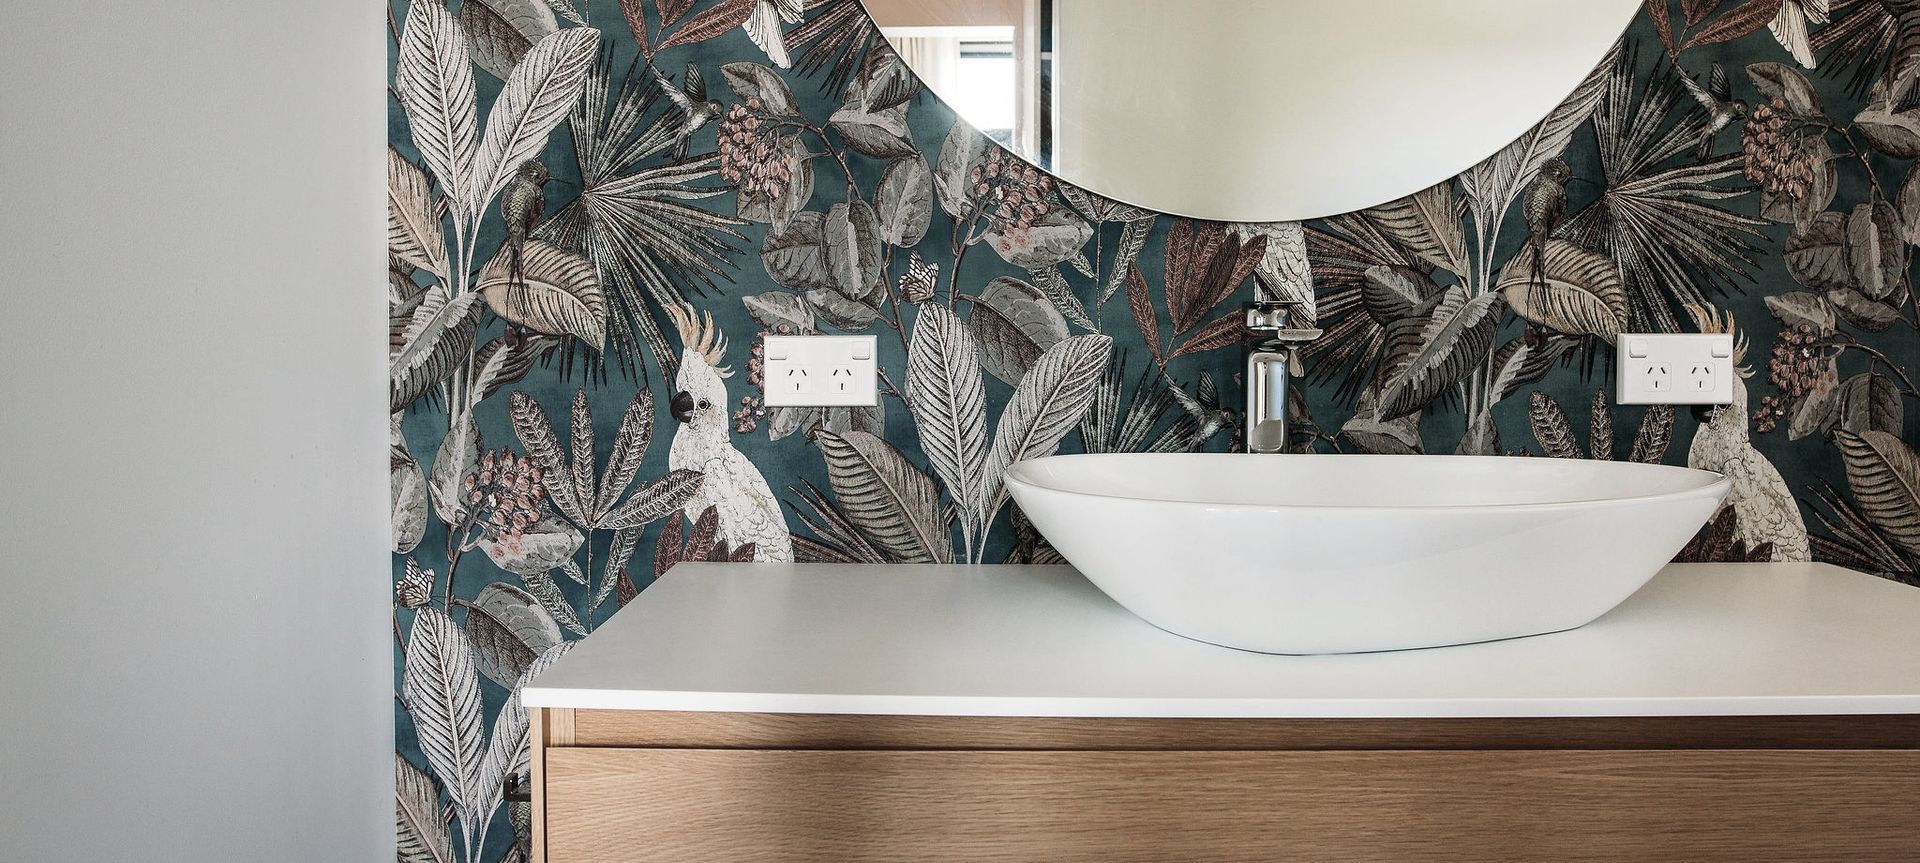 Wallpaper and Tiled Bathroom Design banner